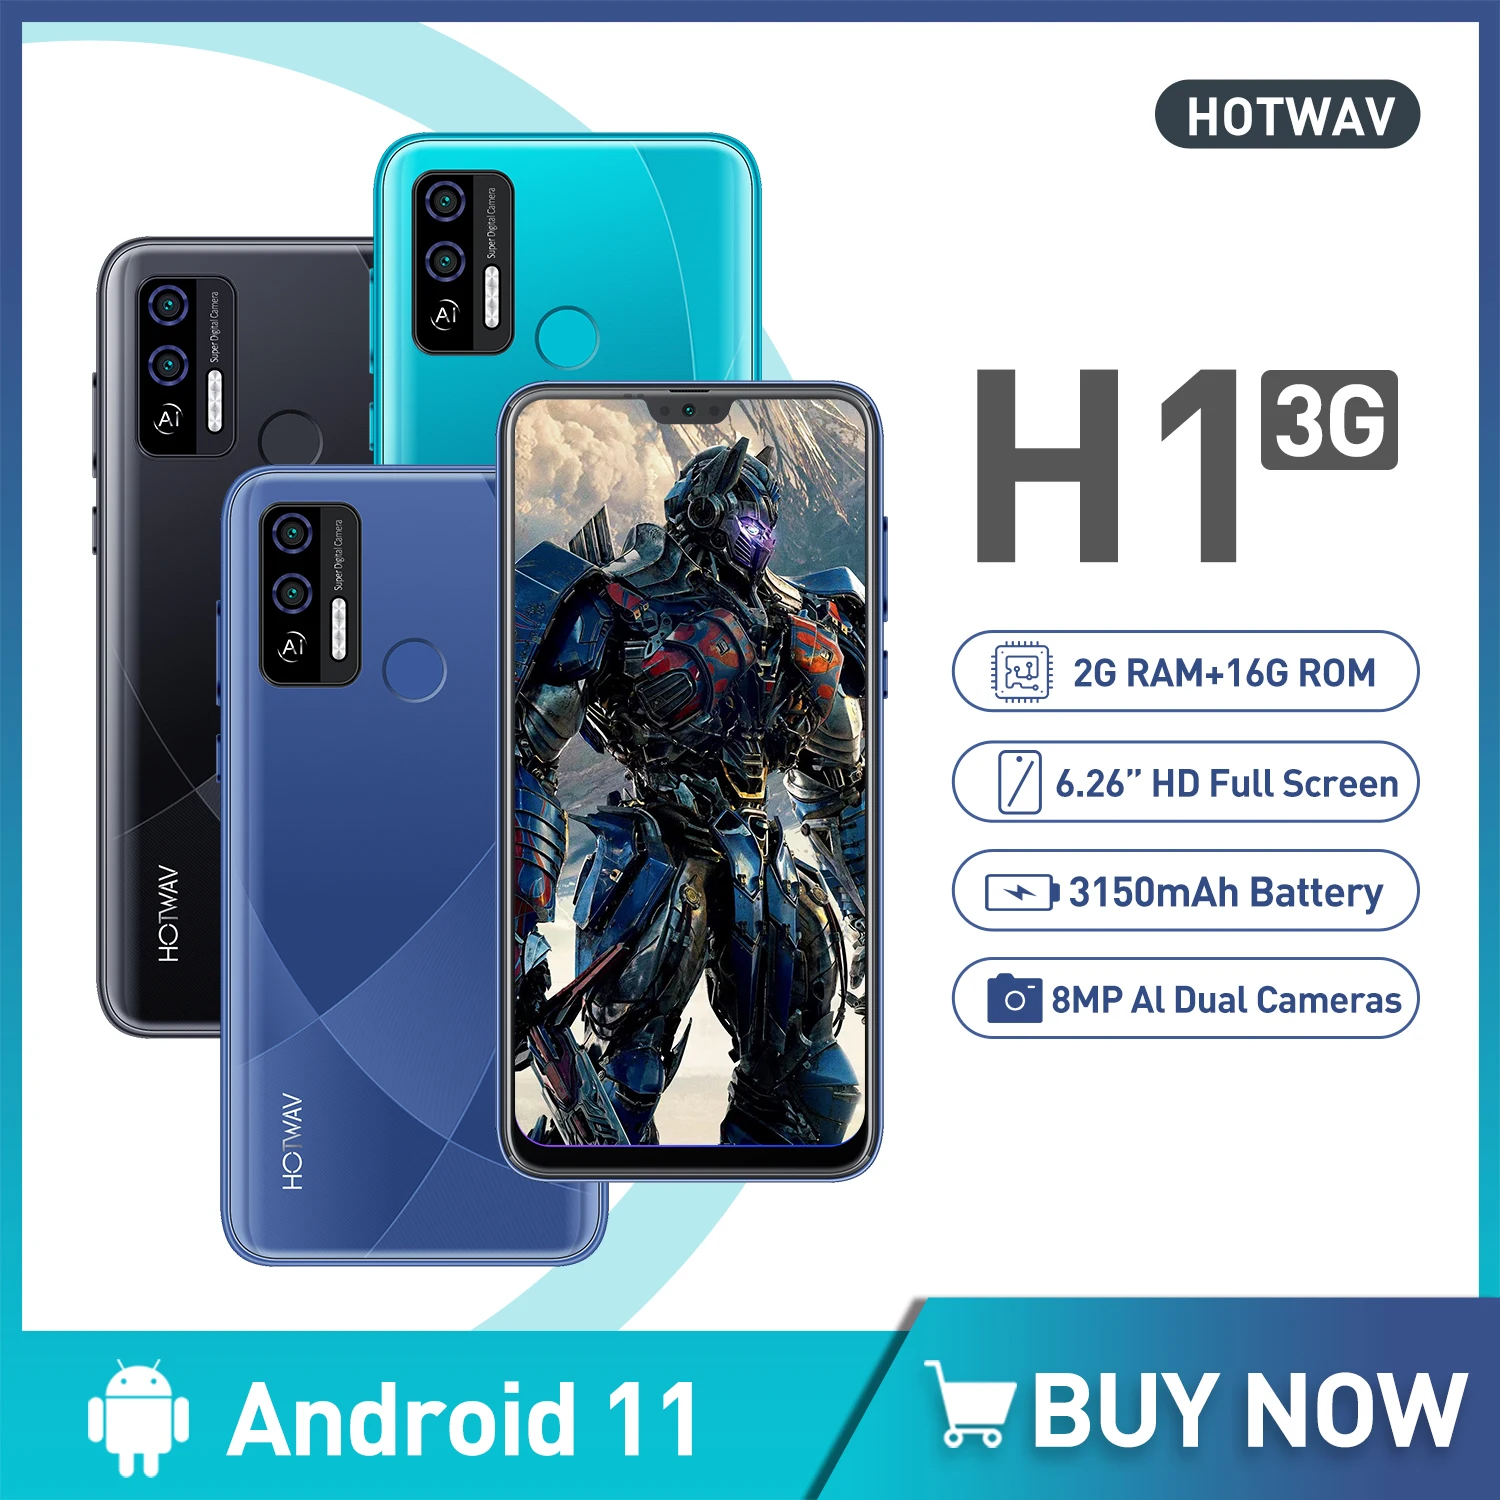 HOTWAV H1 Mobile Phone Android 11 Quad Core Cellphone 6.26 inch HD Smartphone 2GB RAM 16GB ROM 8MP Al Camera Dual SIM 3G 3150mAh